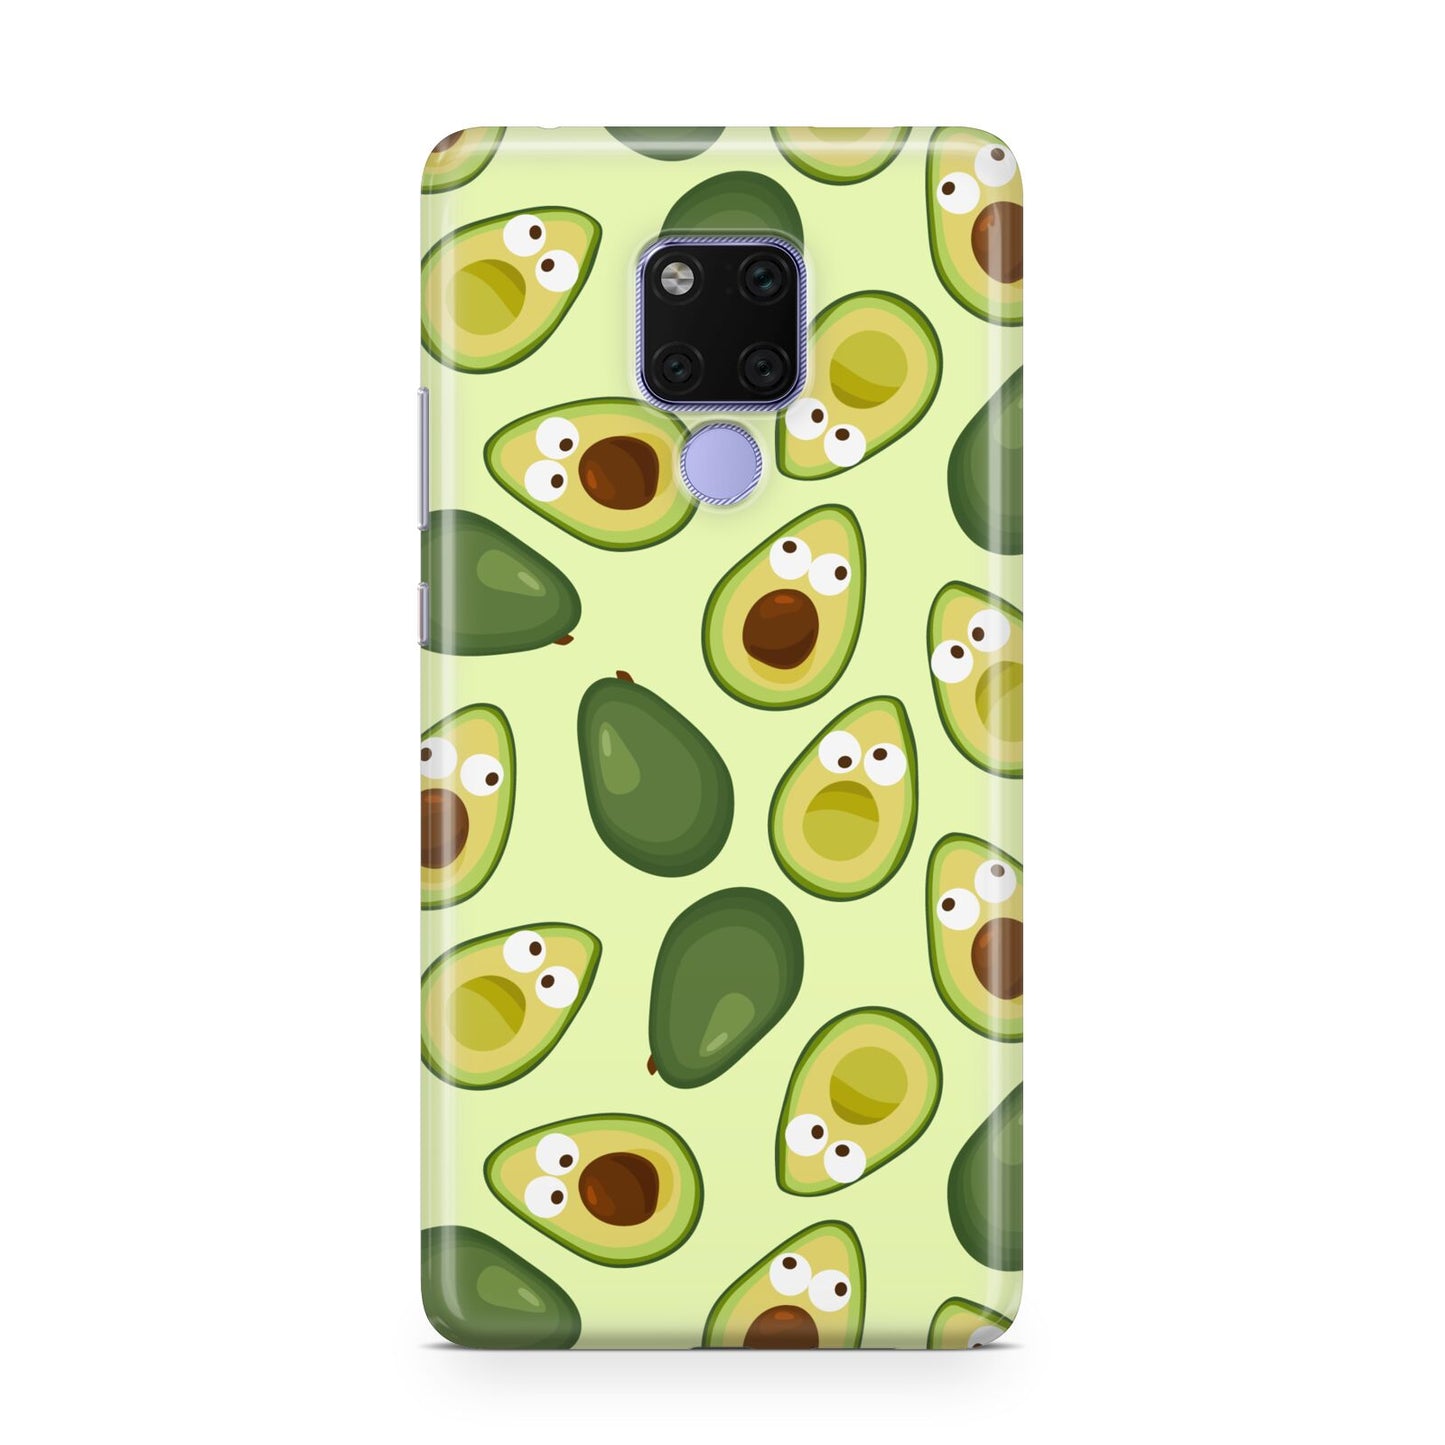 Avocado Huawei Mate 20X Phone Case